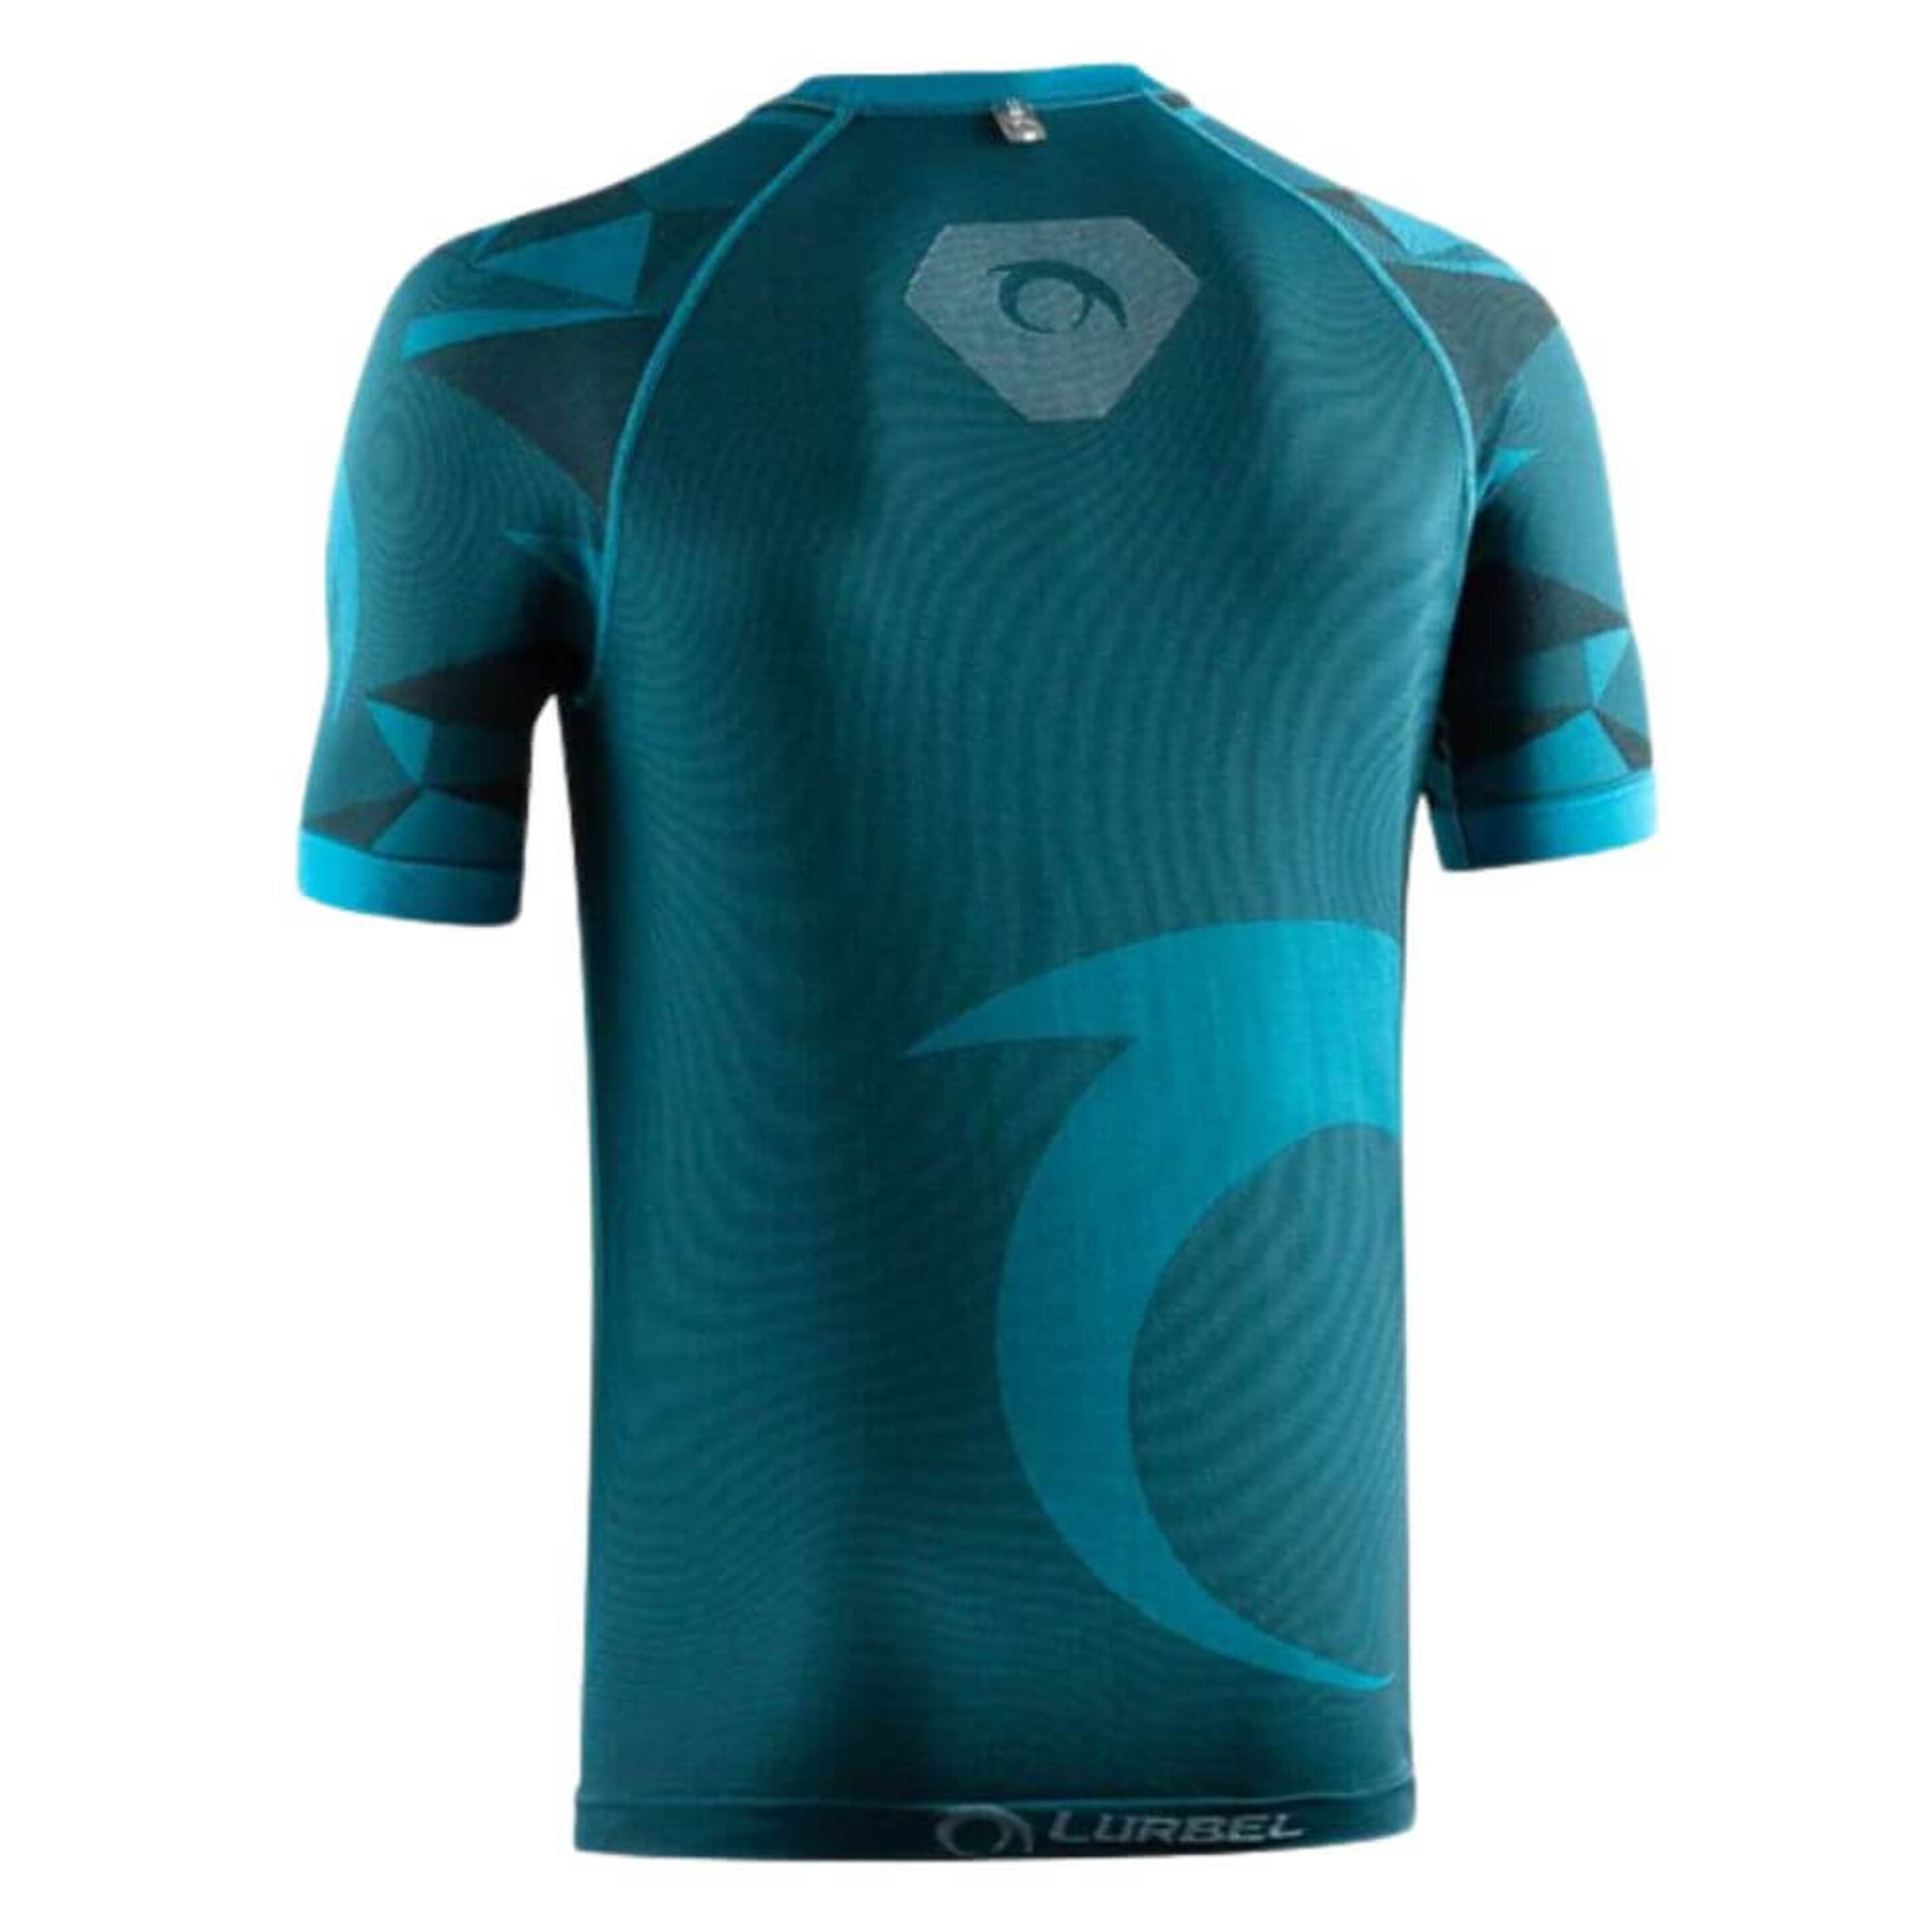 Camiseta Running Lurbel Samba Short Sleeves - Azul Turquesa  MKP